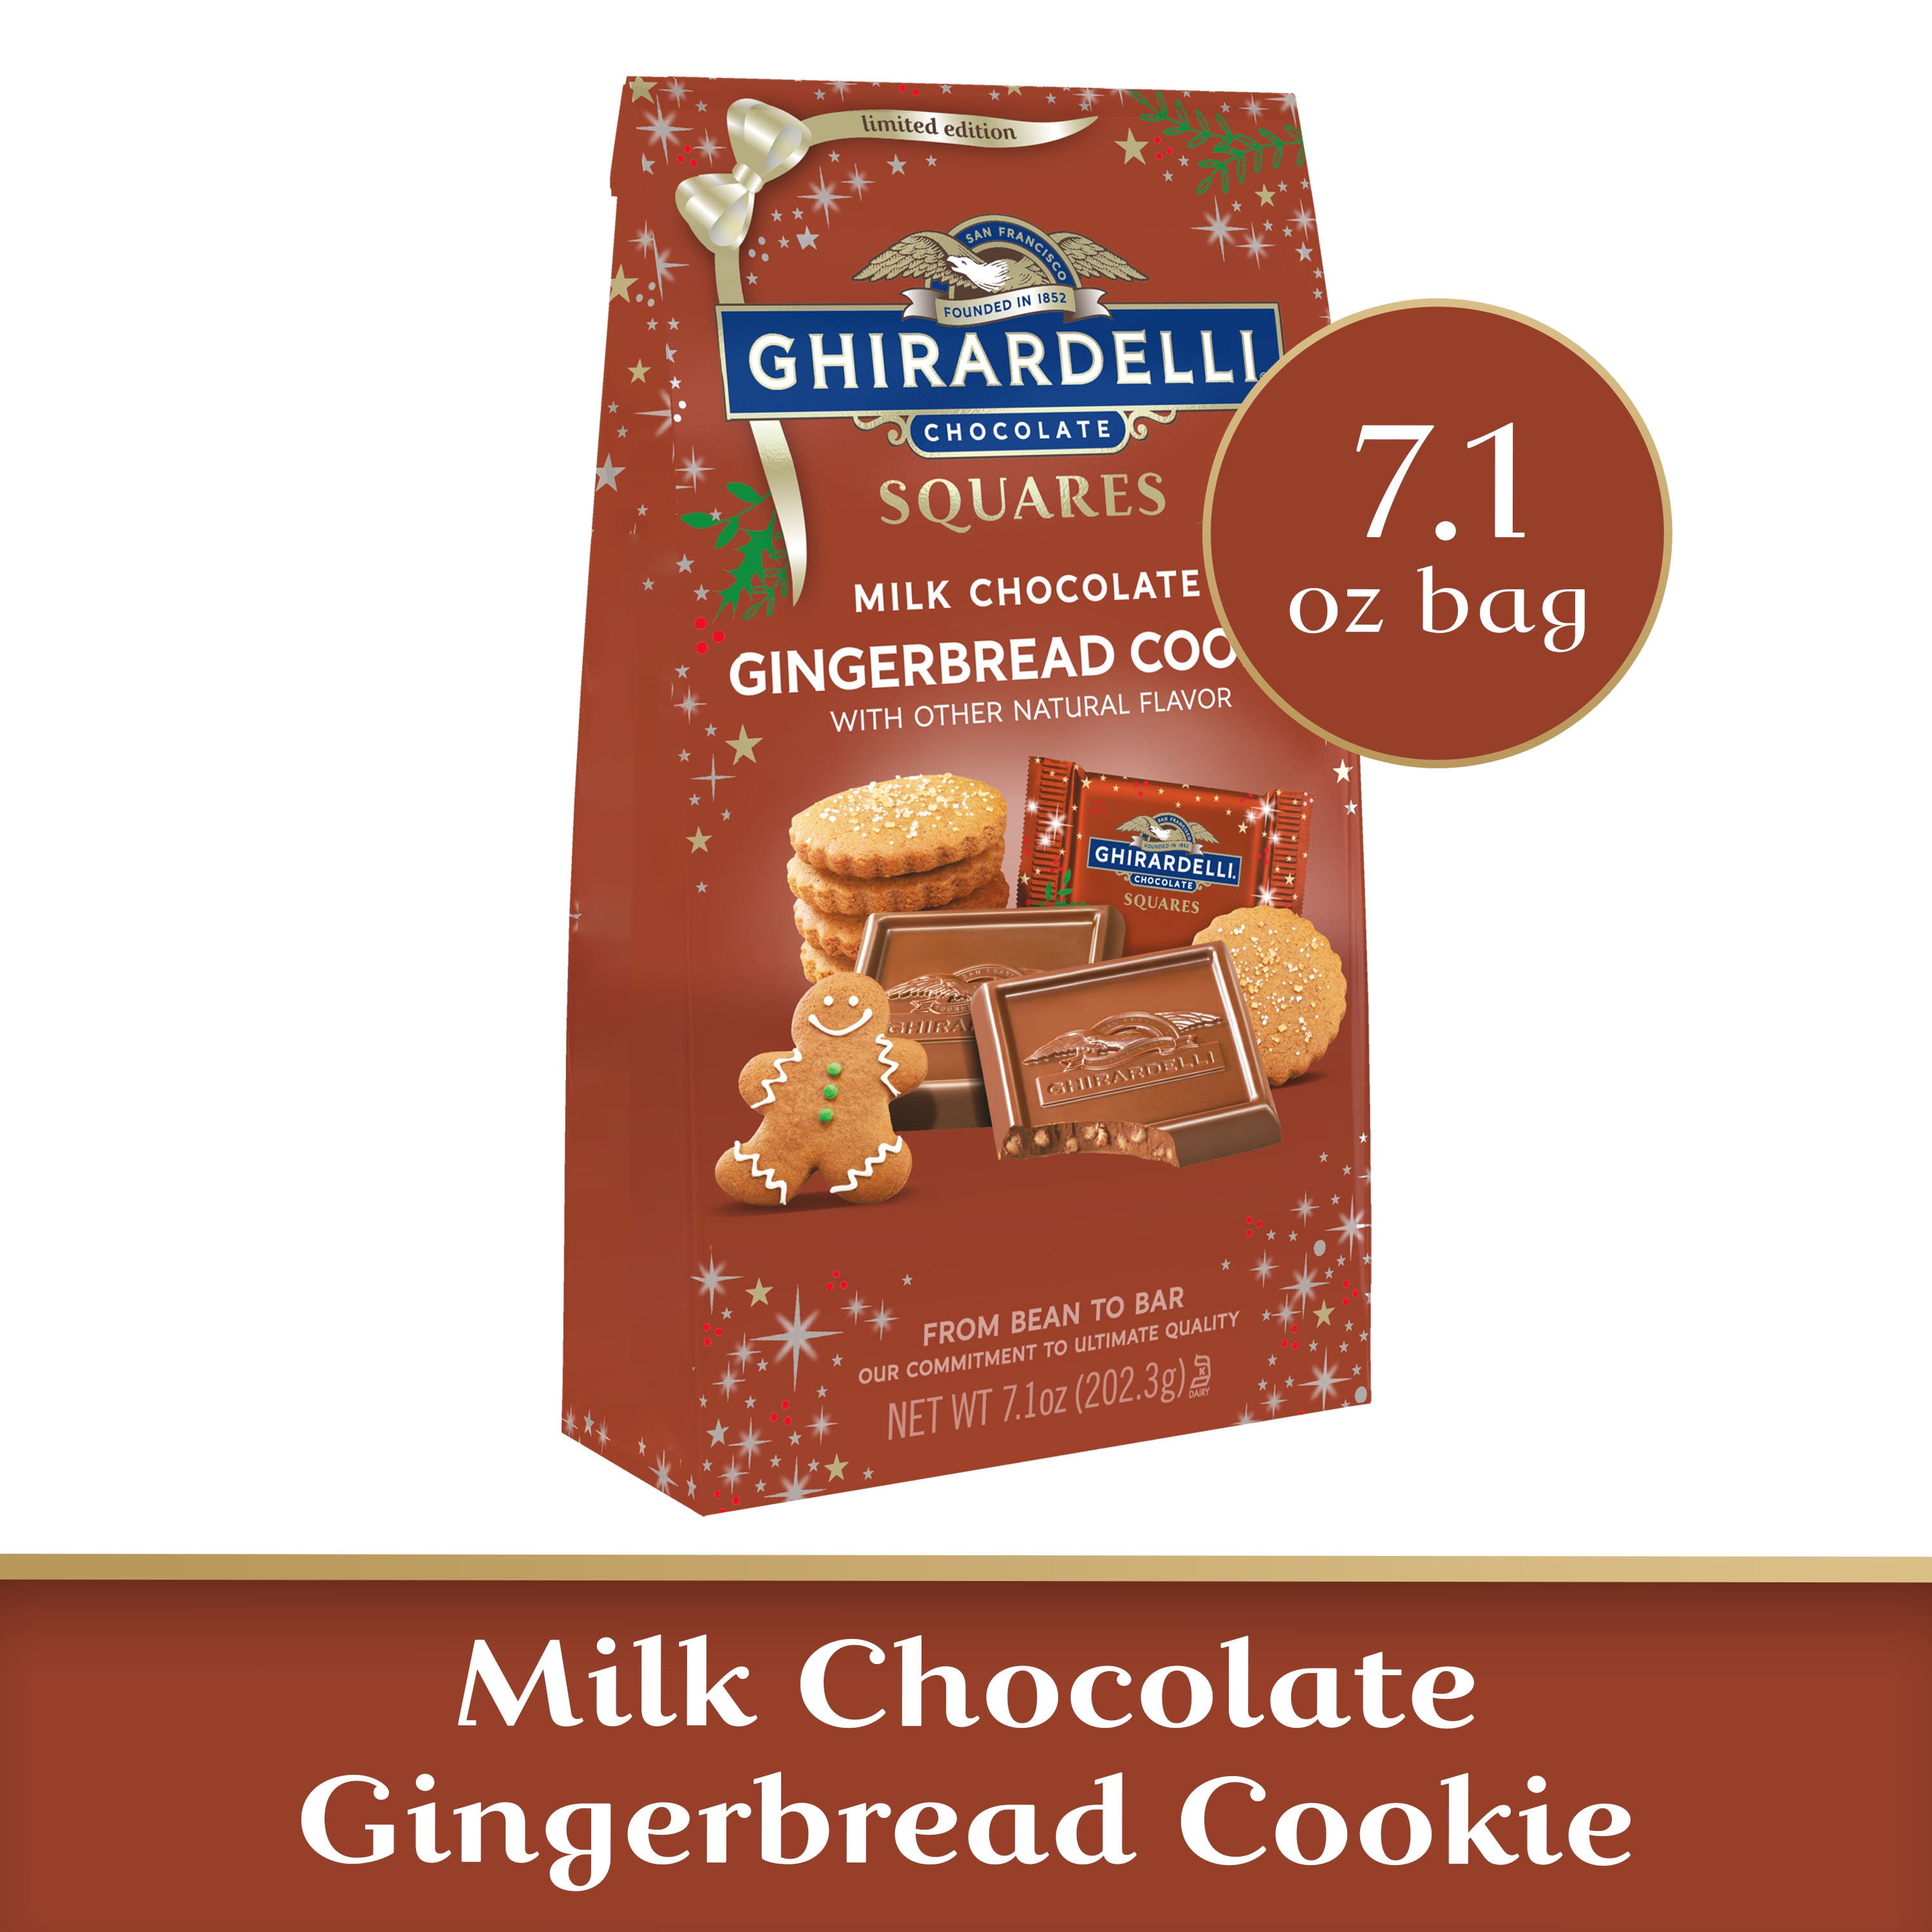 GHIRARDELLI Milk Chocolate Gingerbread Cookie SQUARES, 7.1 Oz Bag